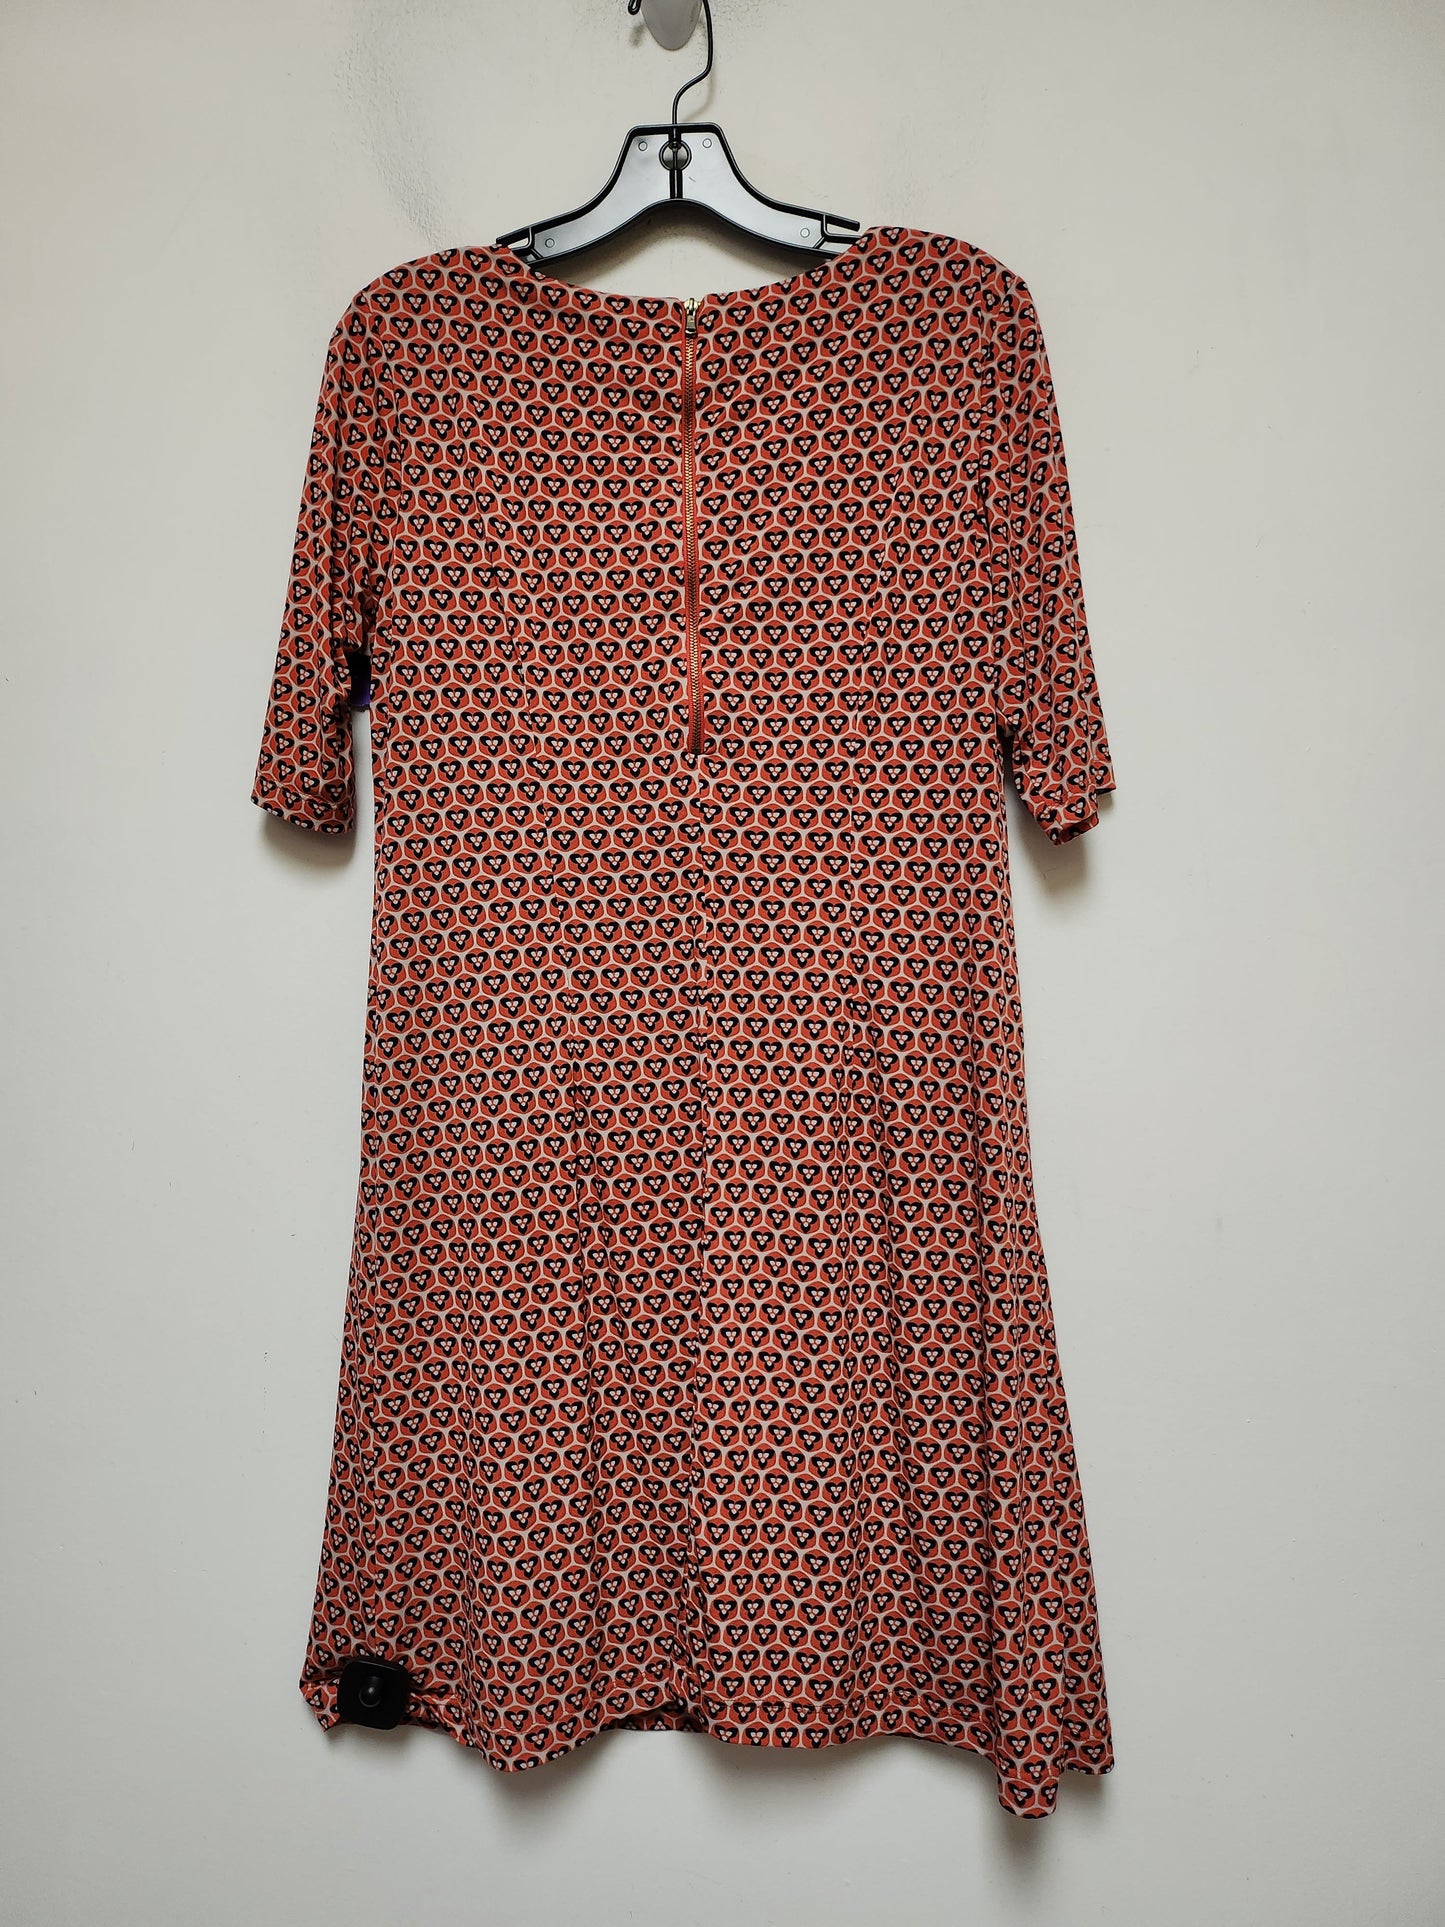 Geometric Pattern Dress Casual Short Taylor, Size 8